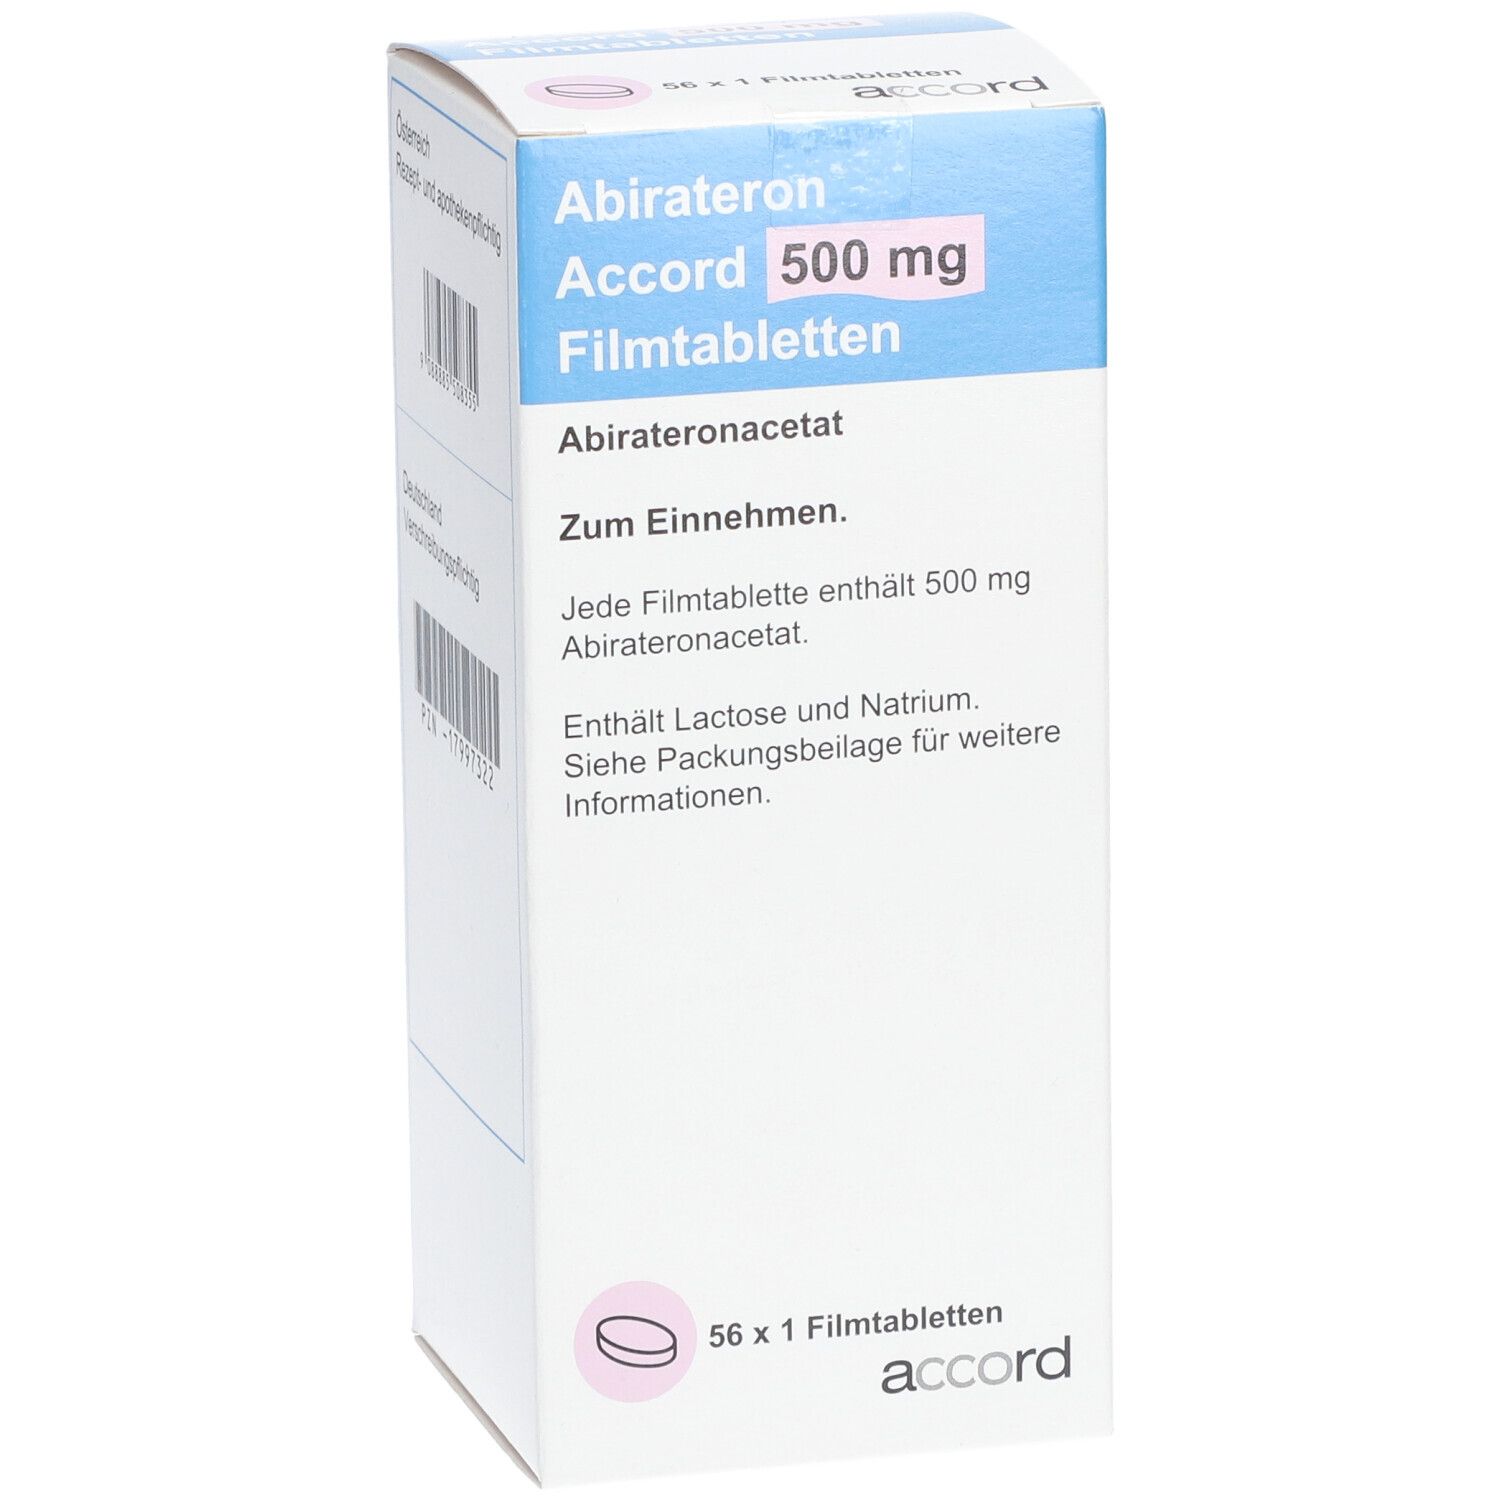 Abirateron Accord 500 mg Filmtabletten